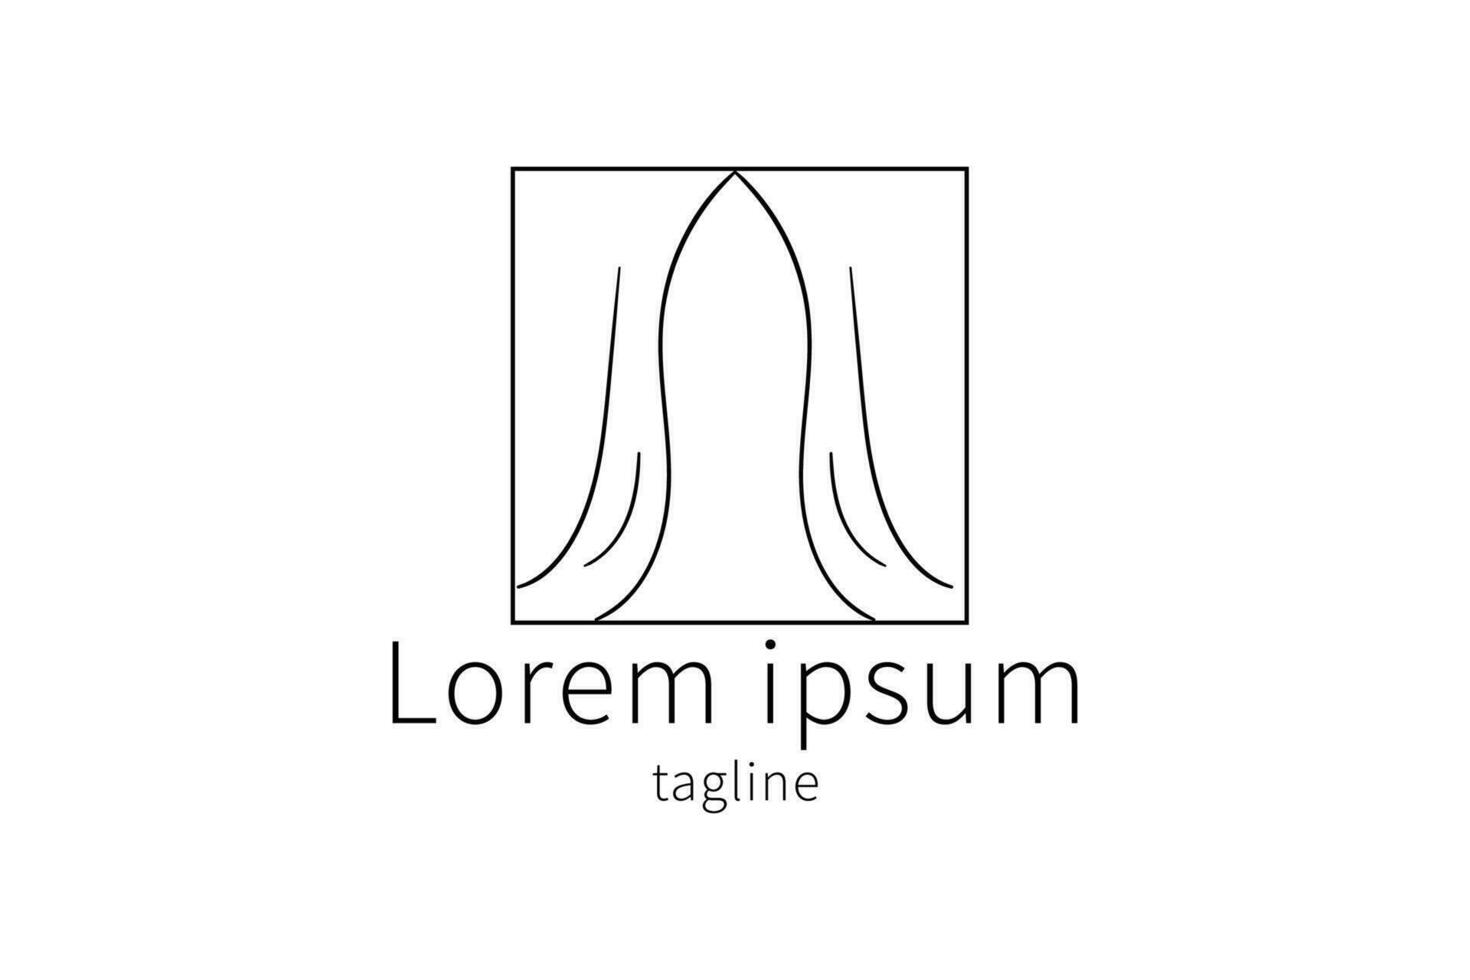 Unique Logo Design vector